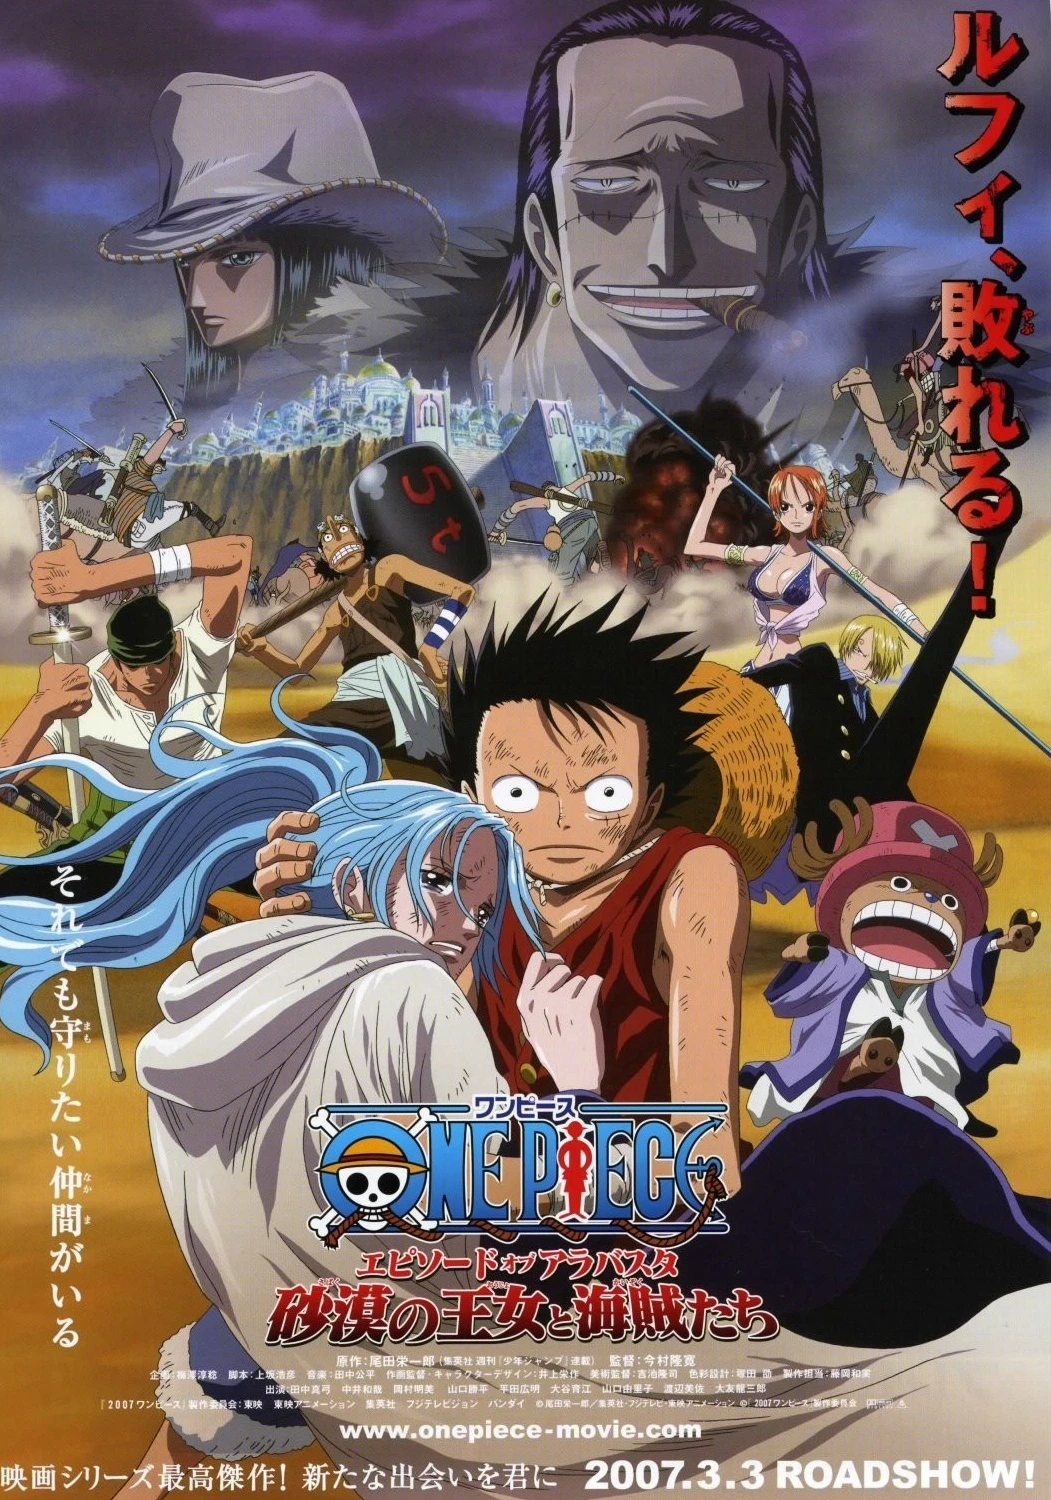 Vua Hải Tặc: Chương Alabasta - Công chúa sa mạc và hải tặc | One Piece the Movie Episode of Alabasta The Queen of the Desert and the Pirate (Movie 8) (2007)